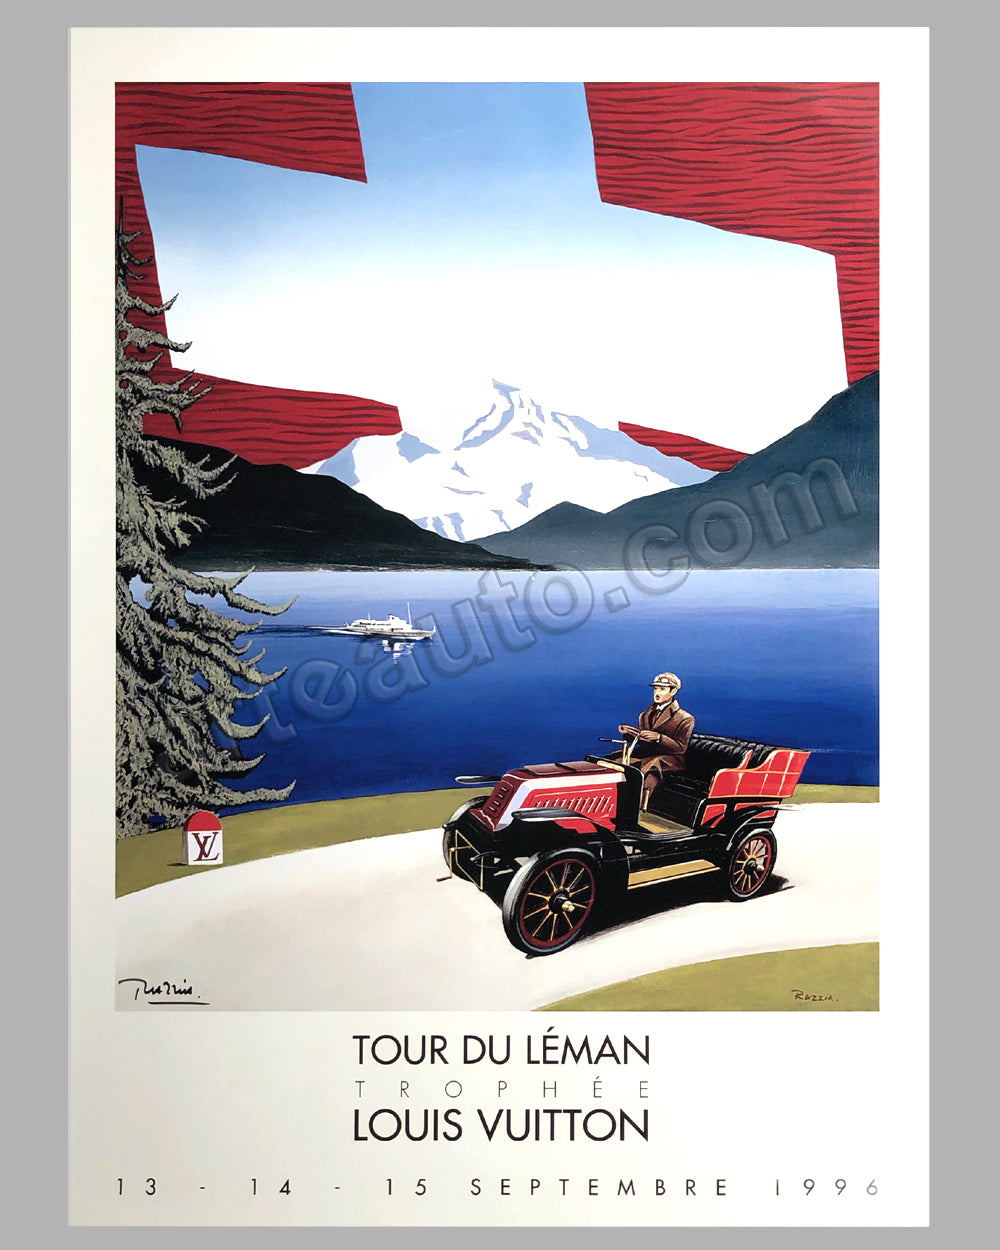 Tour du Léman 1996 Poster by Razzia